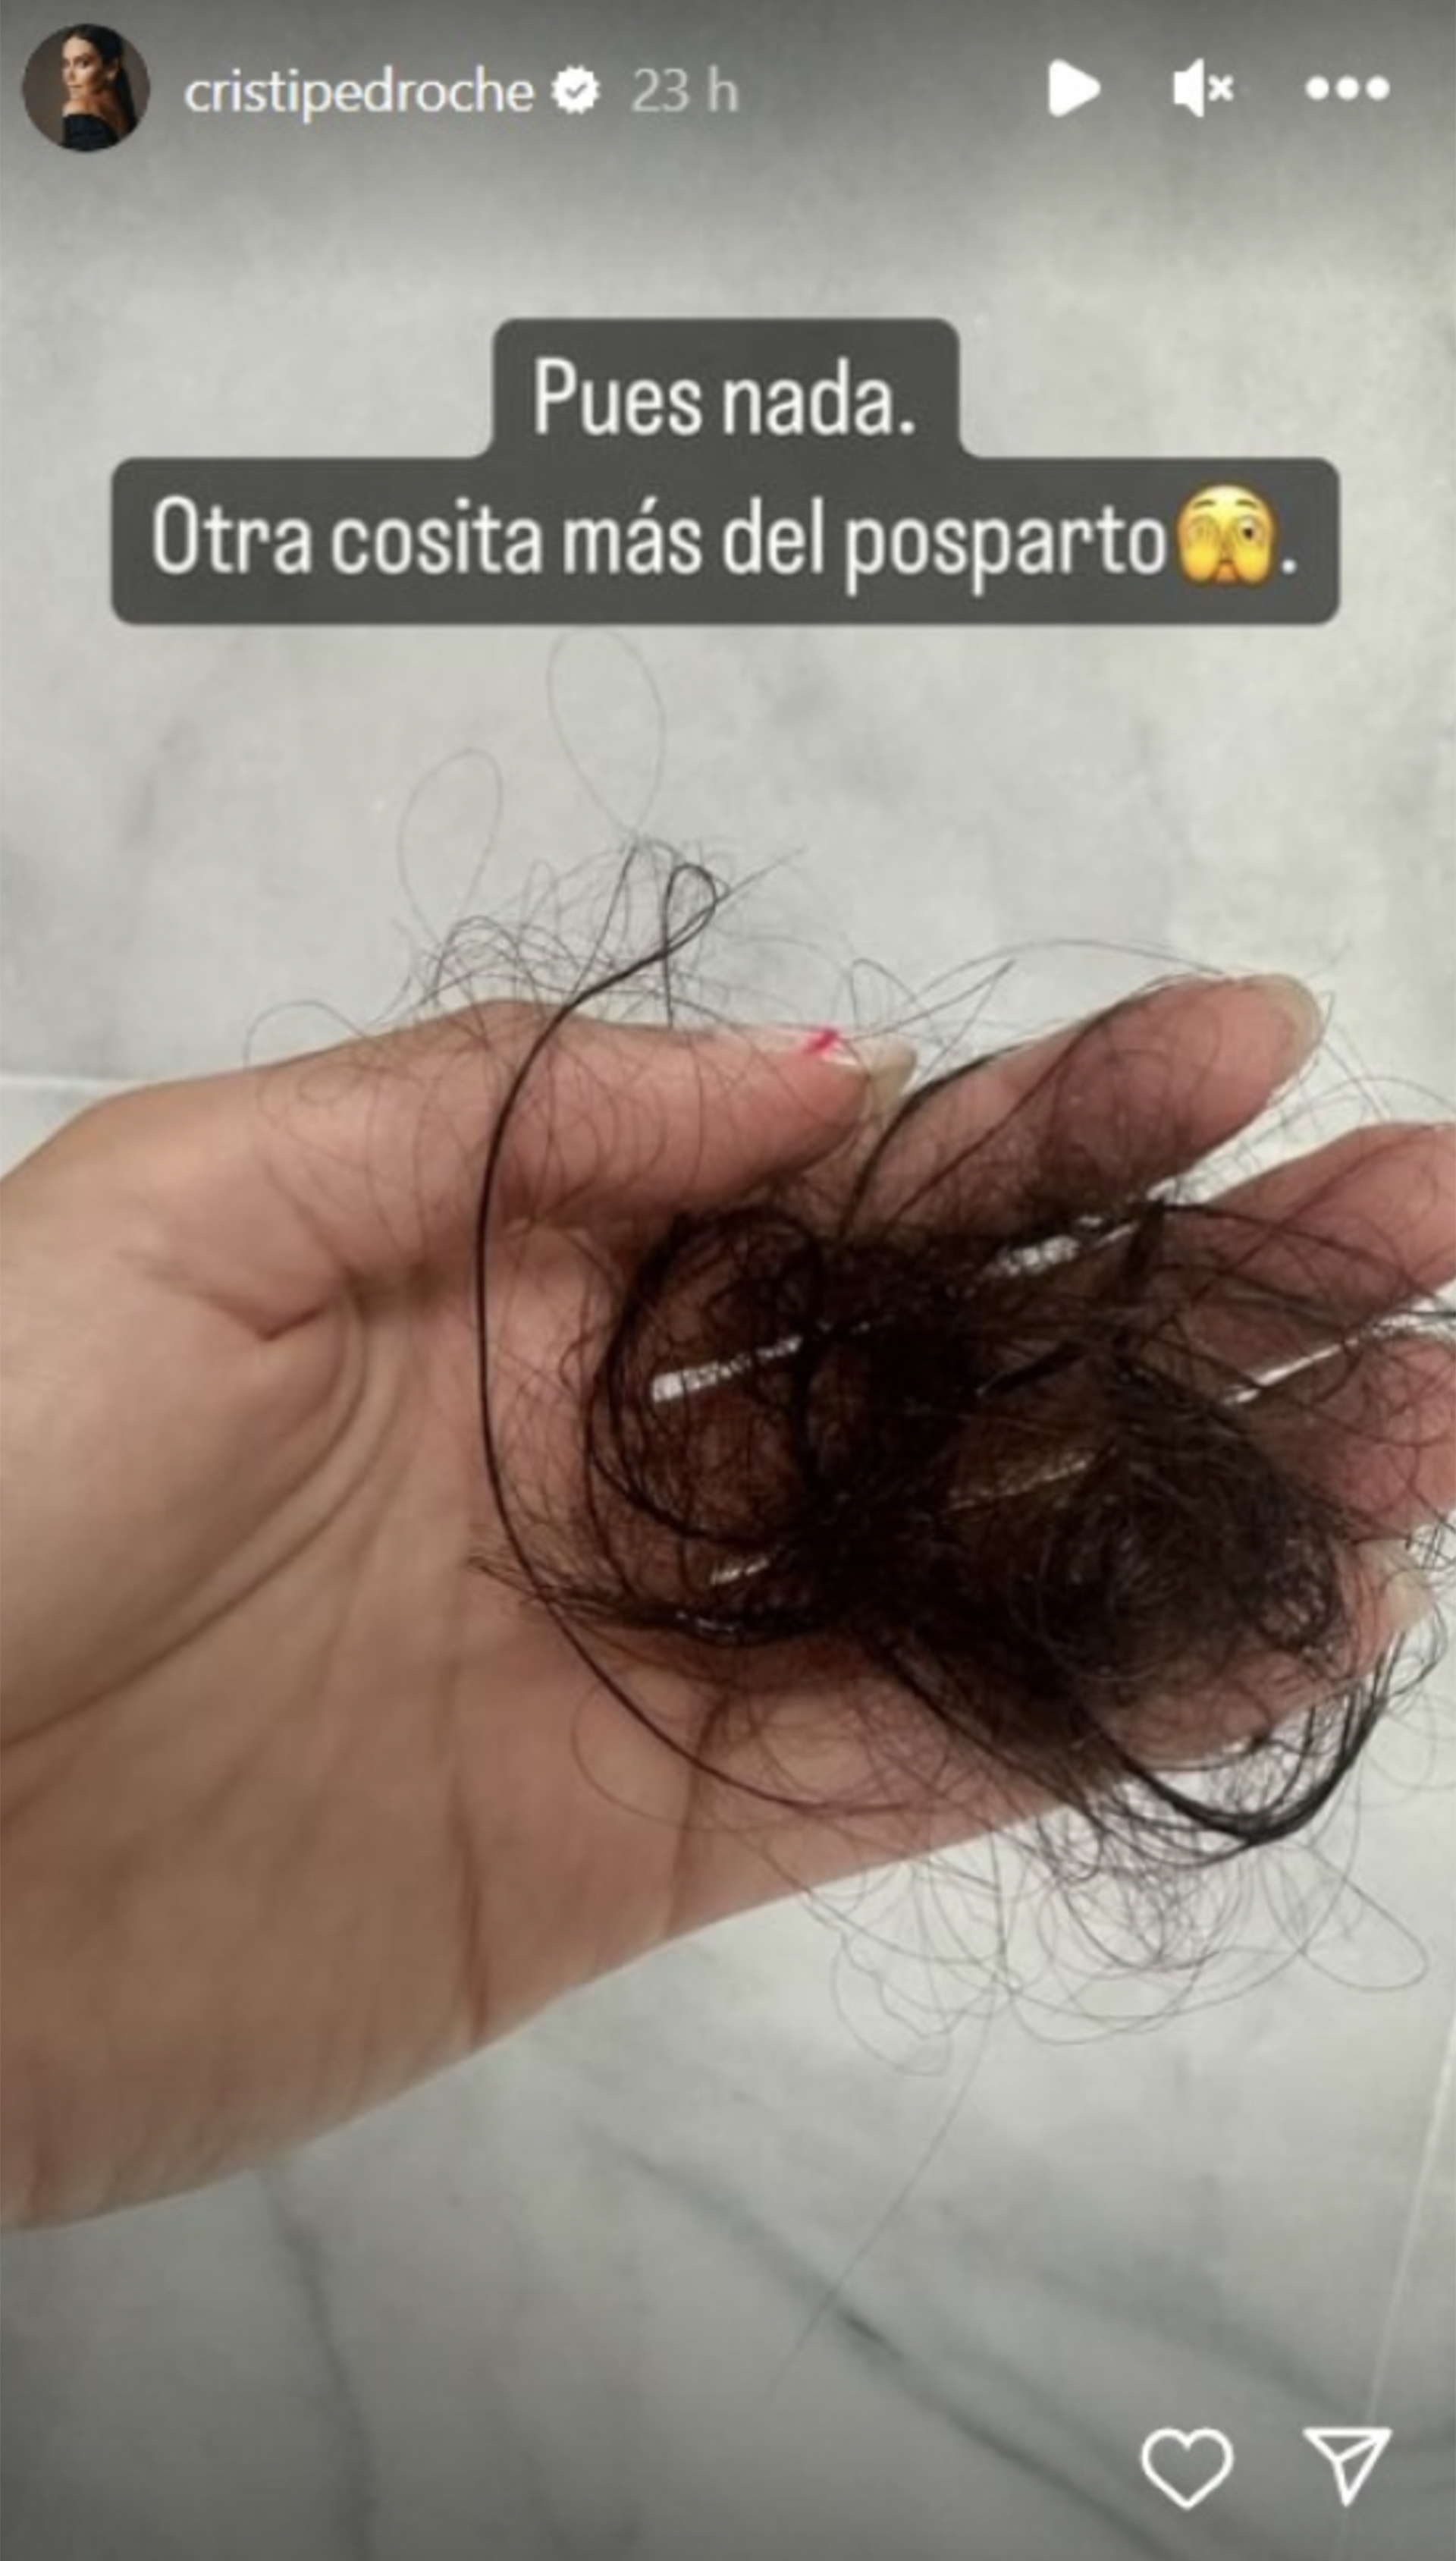 Storie de Cristina Pedroche sobre la caída de cabello.